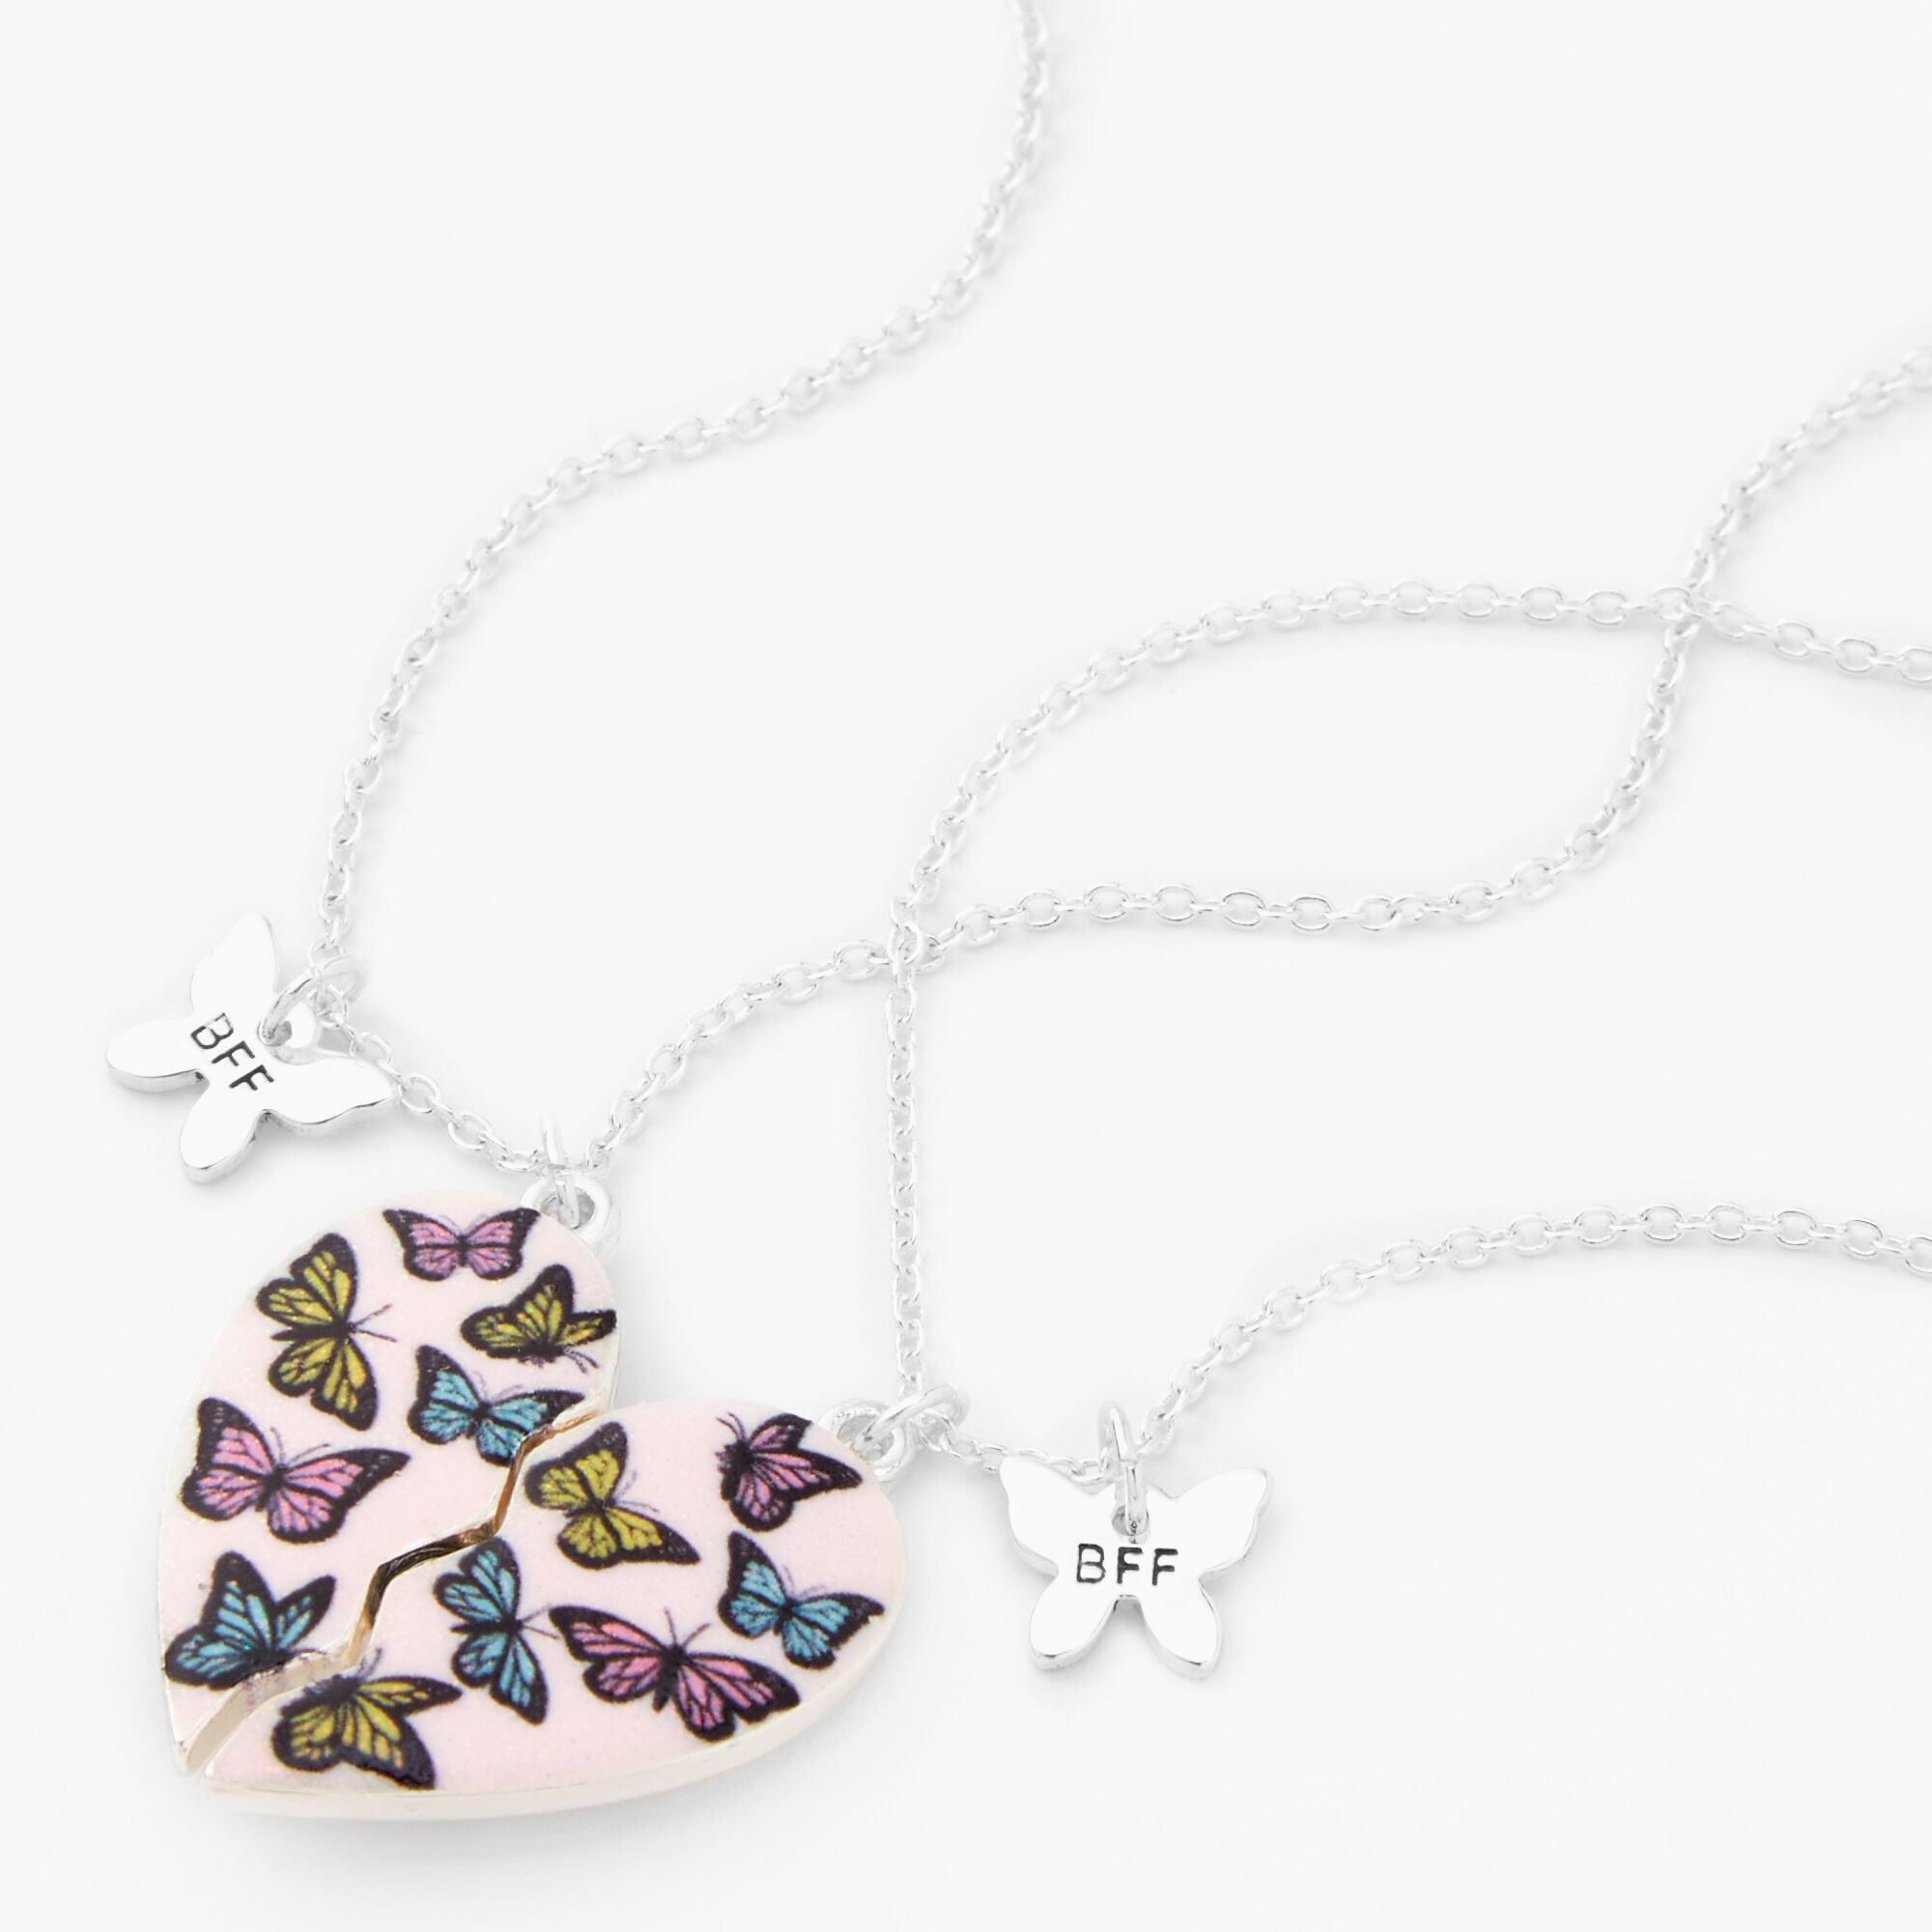 Vintage Lady Best Friend Necklace Set for 3 - Best Friend Jewelry